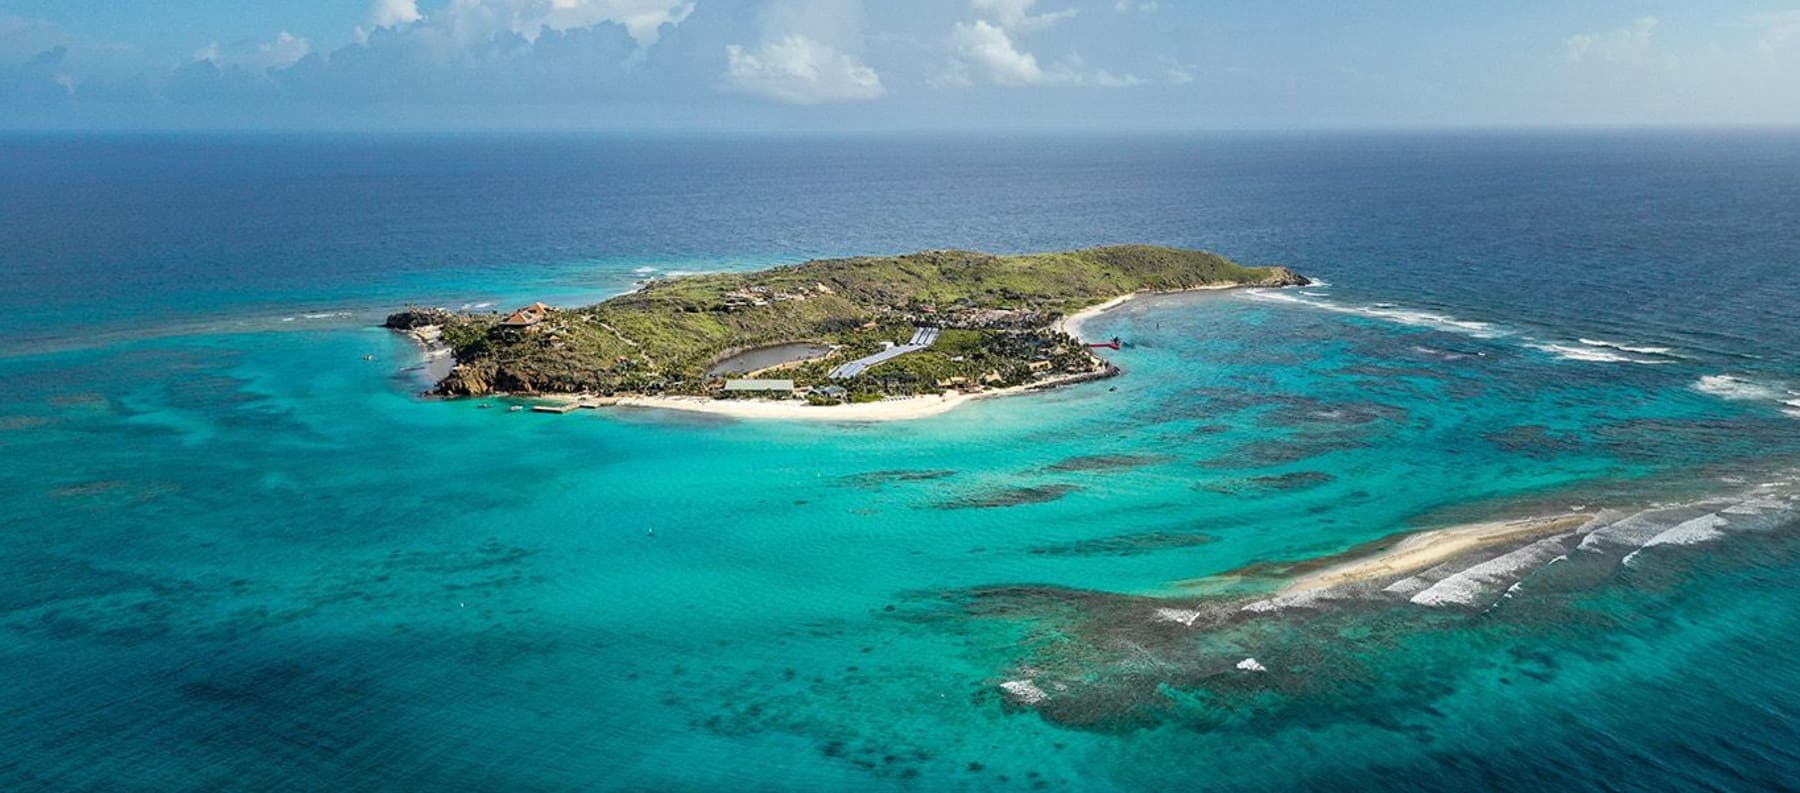 Drone shot of Necker Island